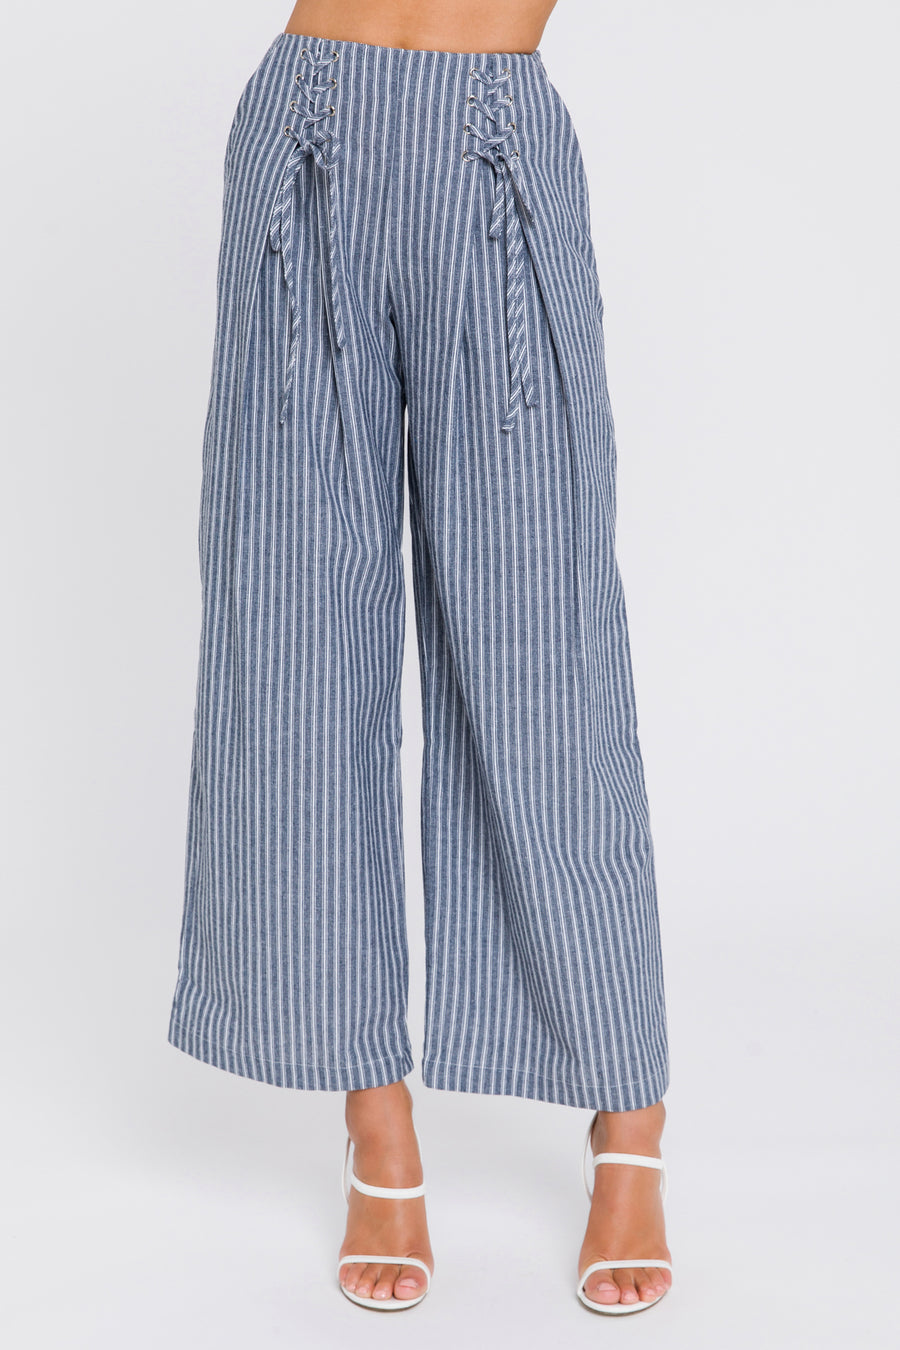 Striped Lace-up Pants